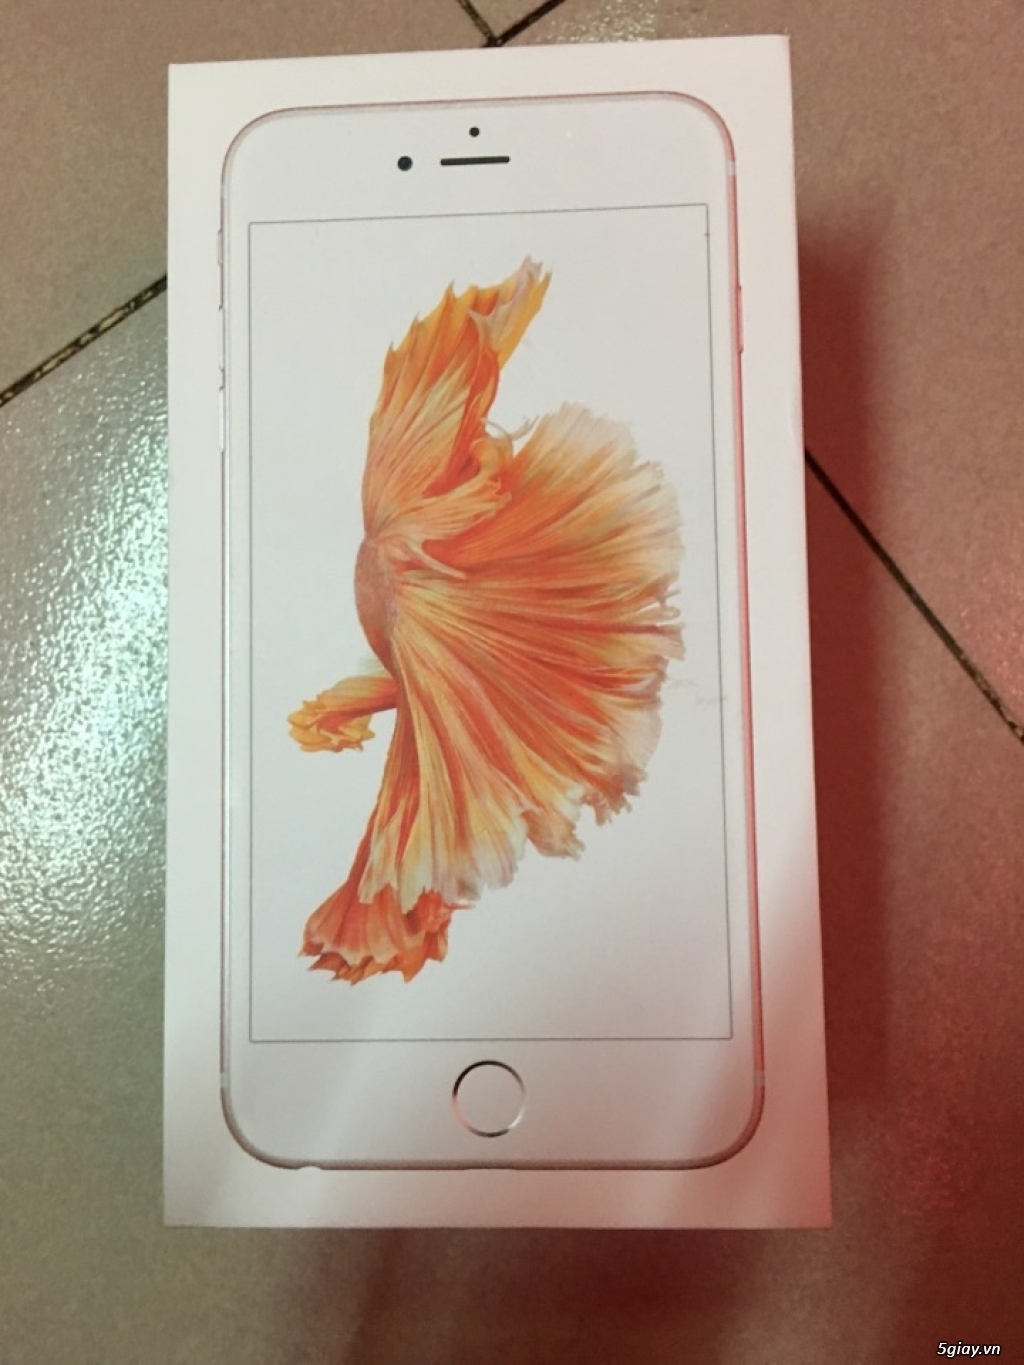 iphone 6s plus 64g rose gold active nha mang sing